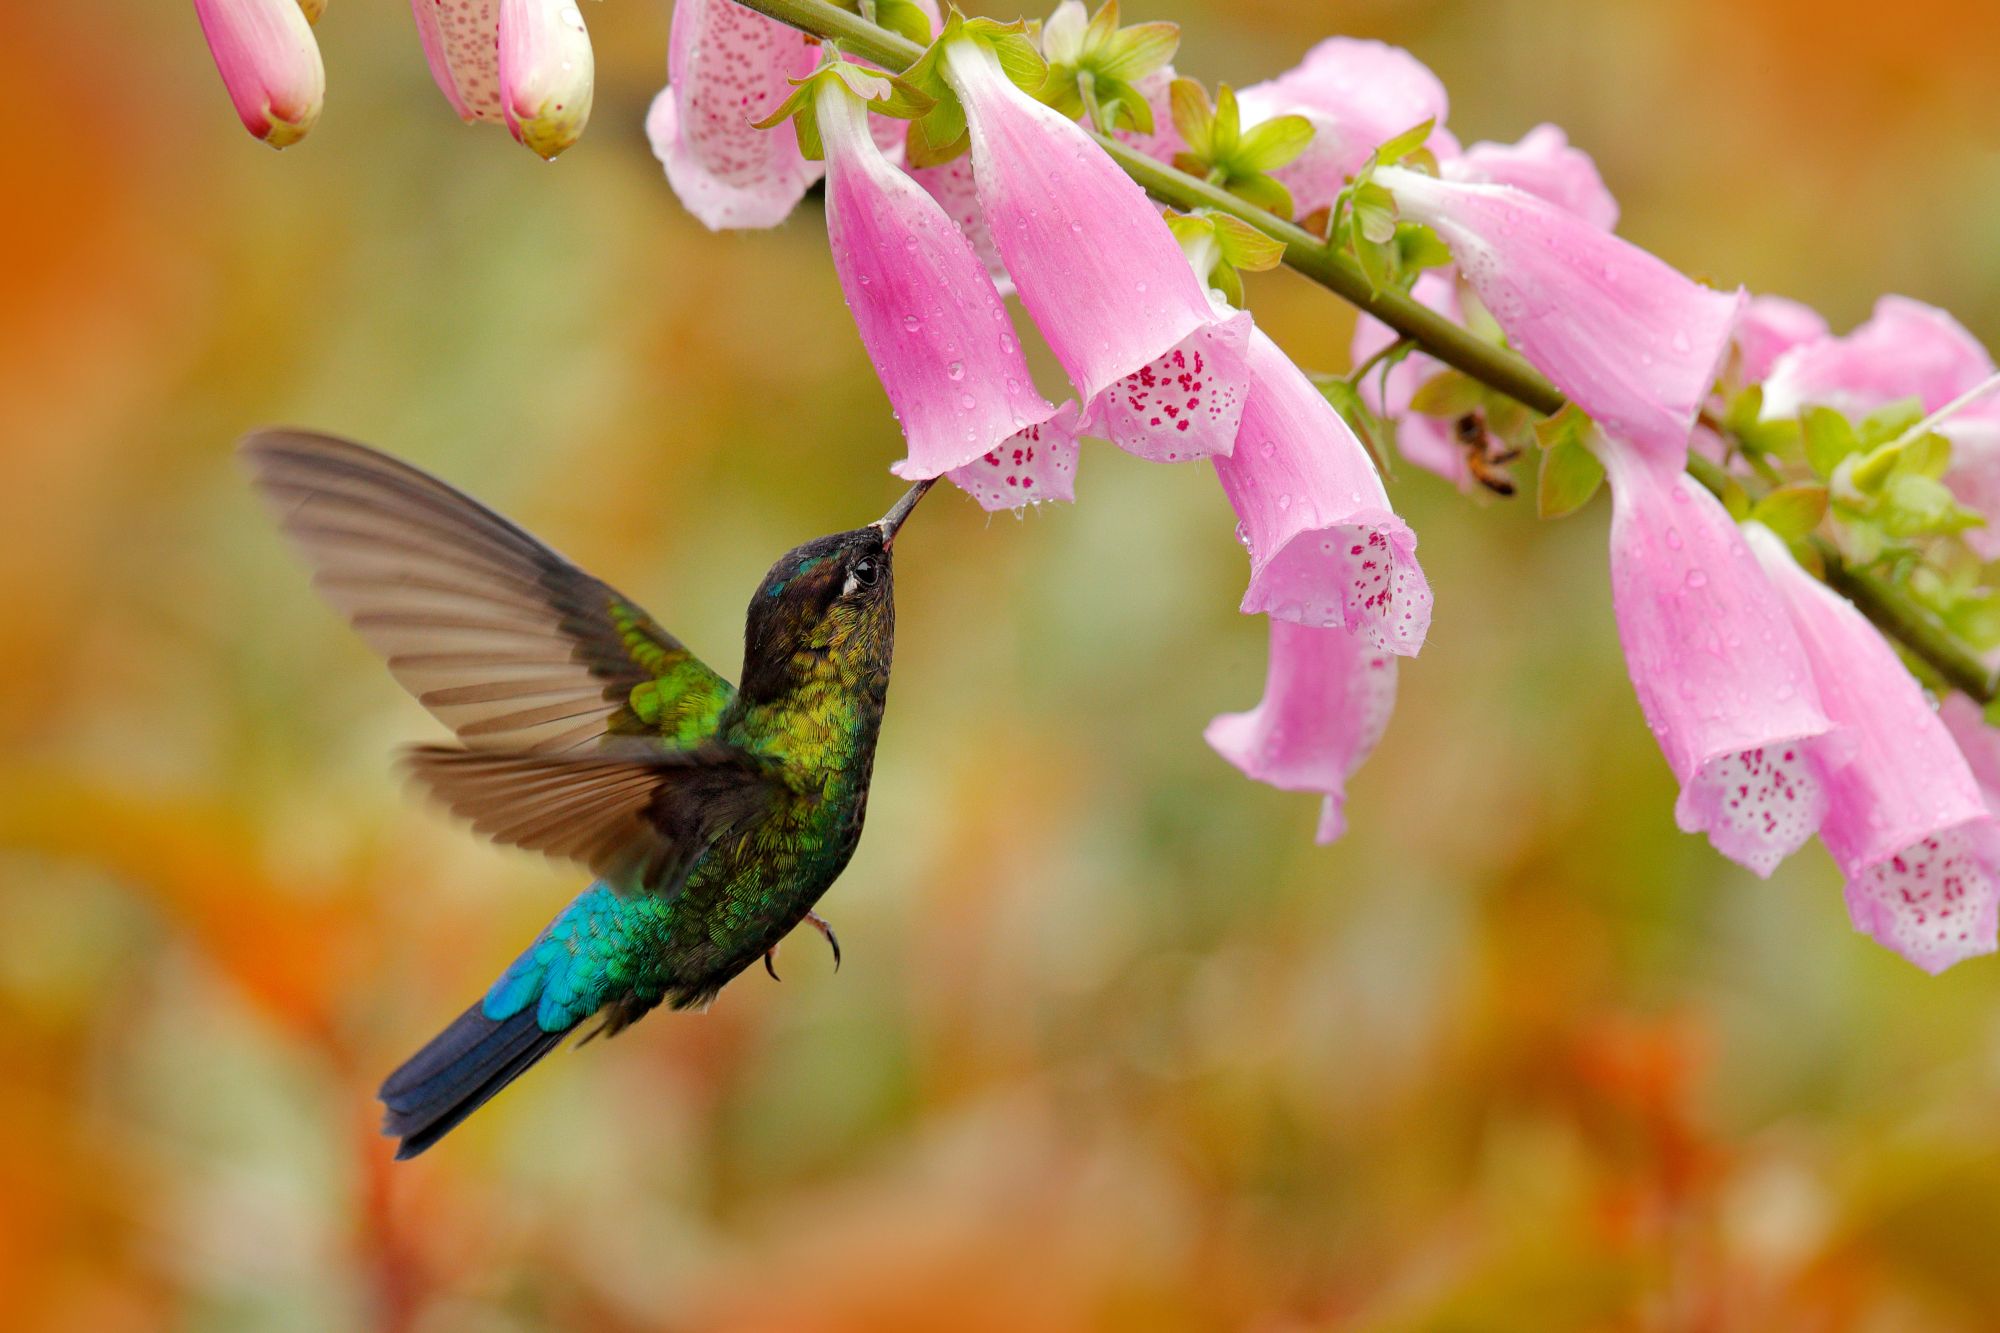 Hummingbird flying near pink flowers, gathering nectar